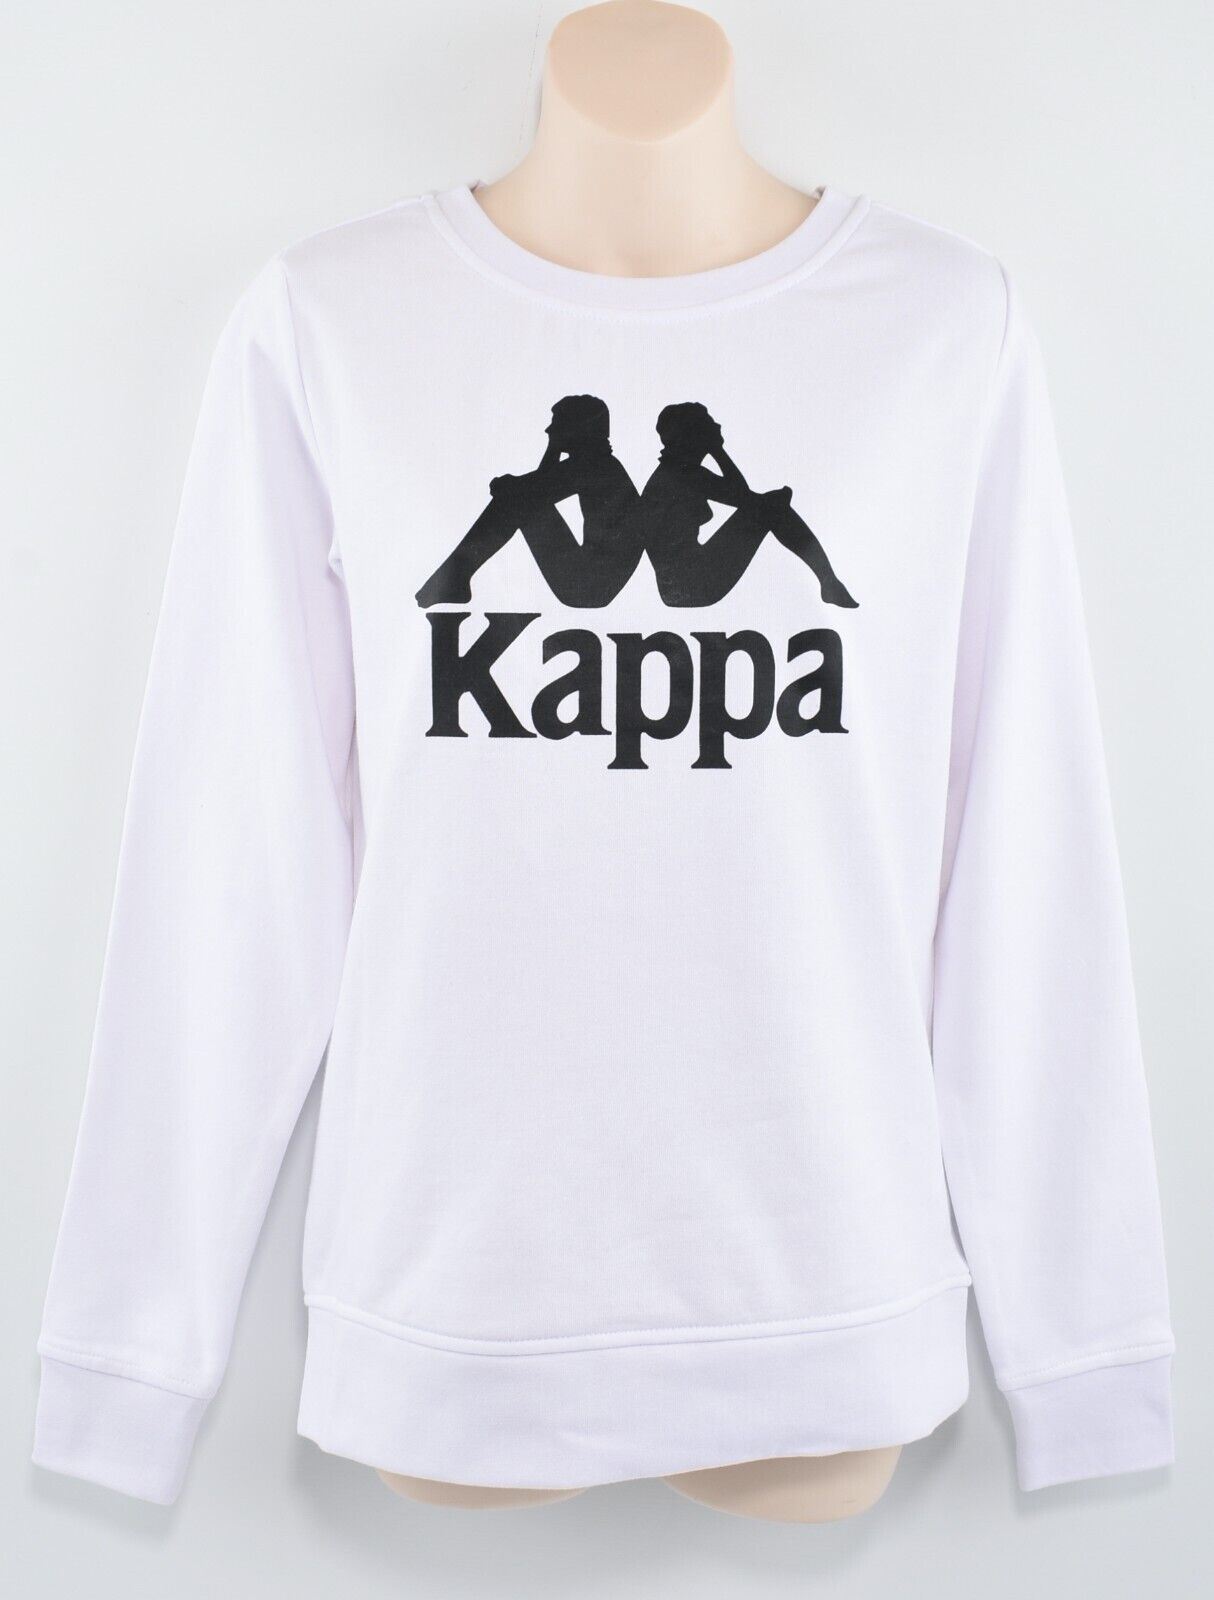 KAPPA Women's Zemin Crew Slim Fit Sweatshirt, White/Black Logo, size L (UK 14)